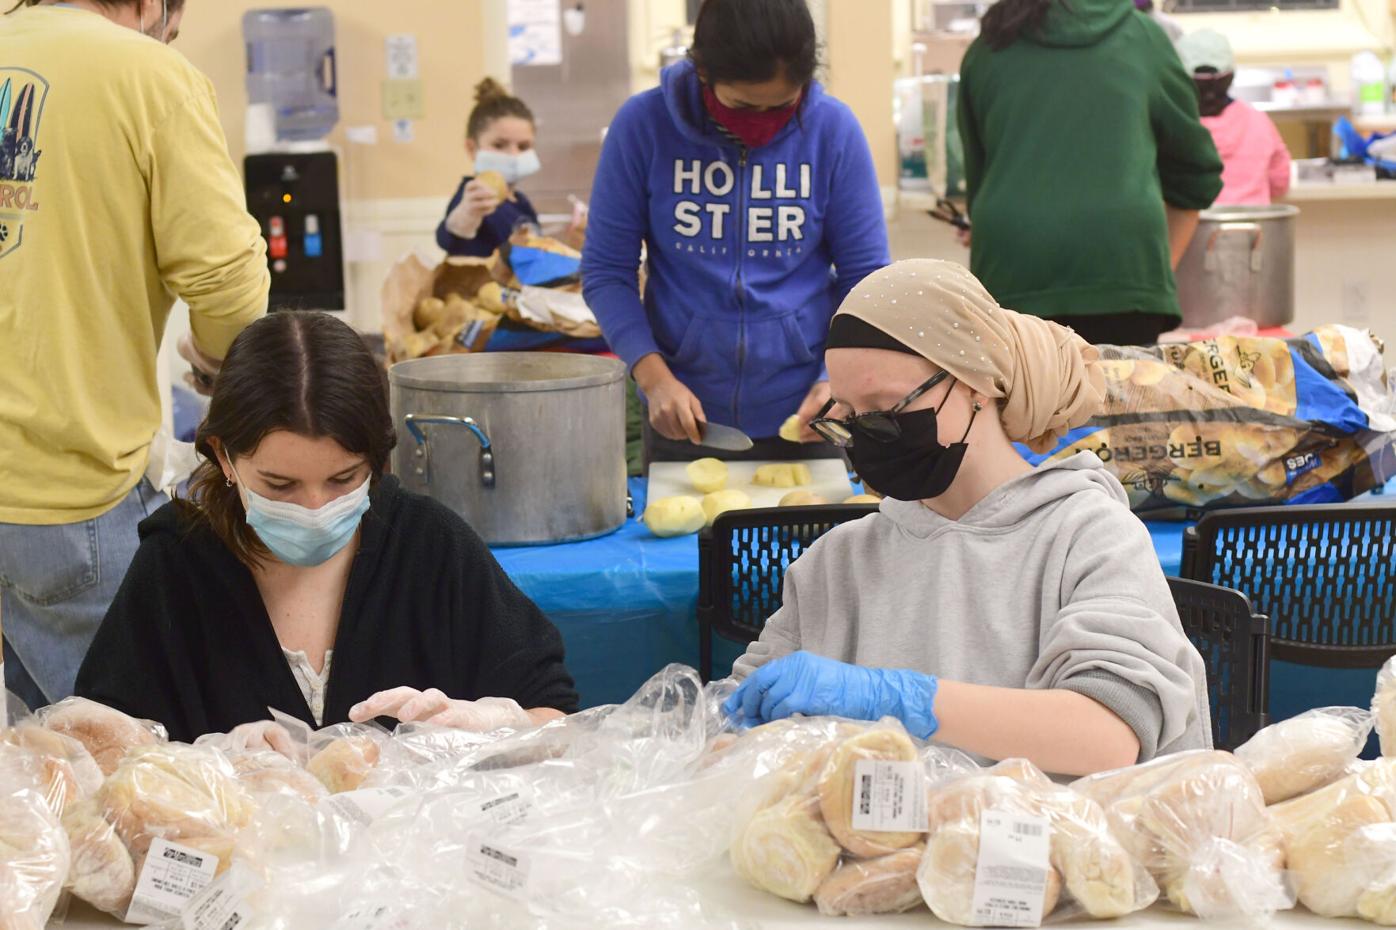 Volunteers prepare meals on wheels for Thanksgiving